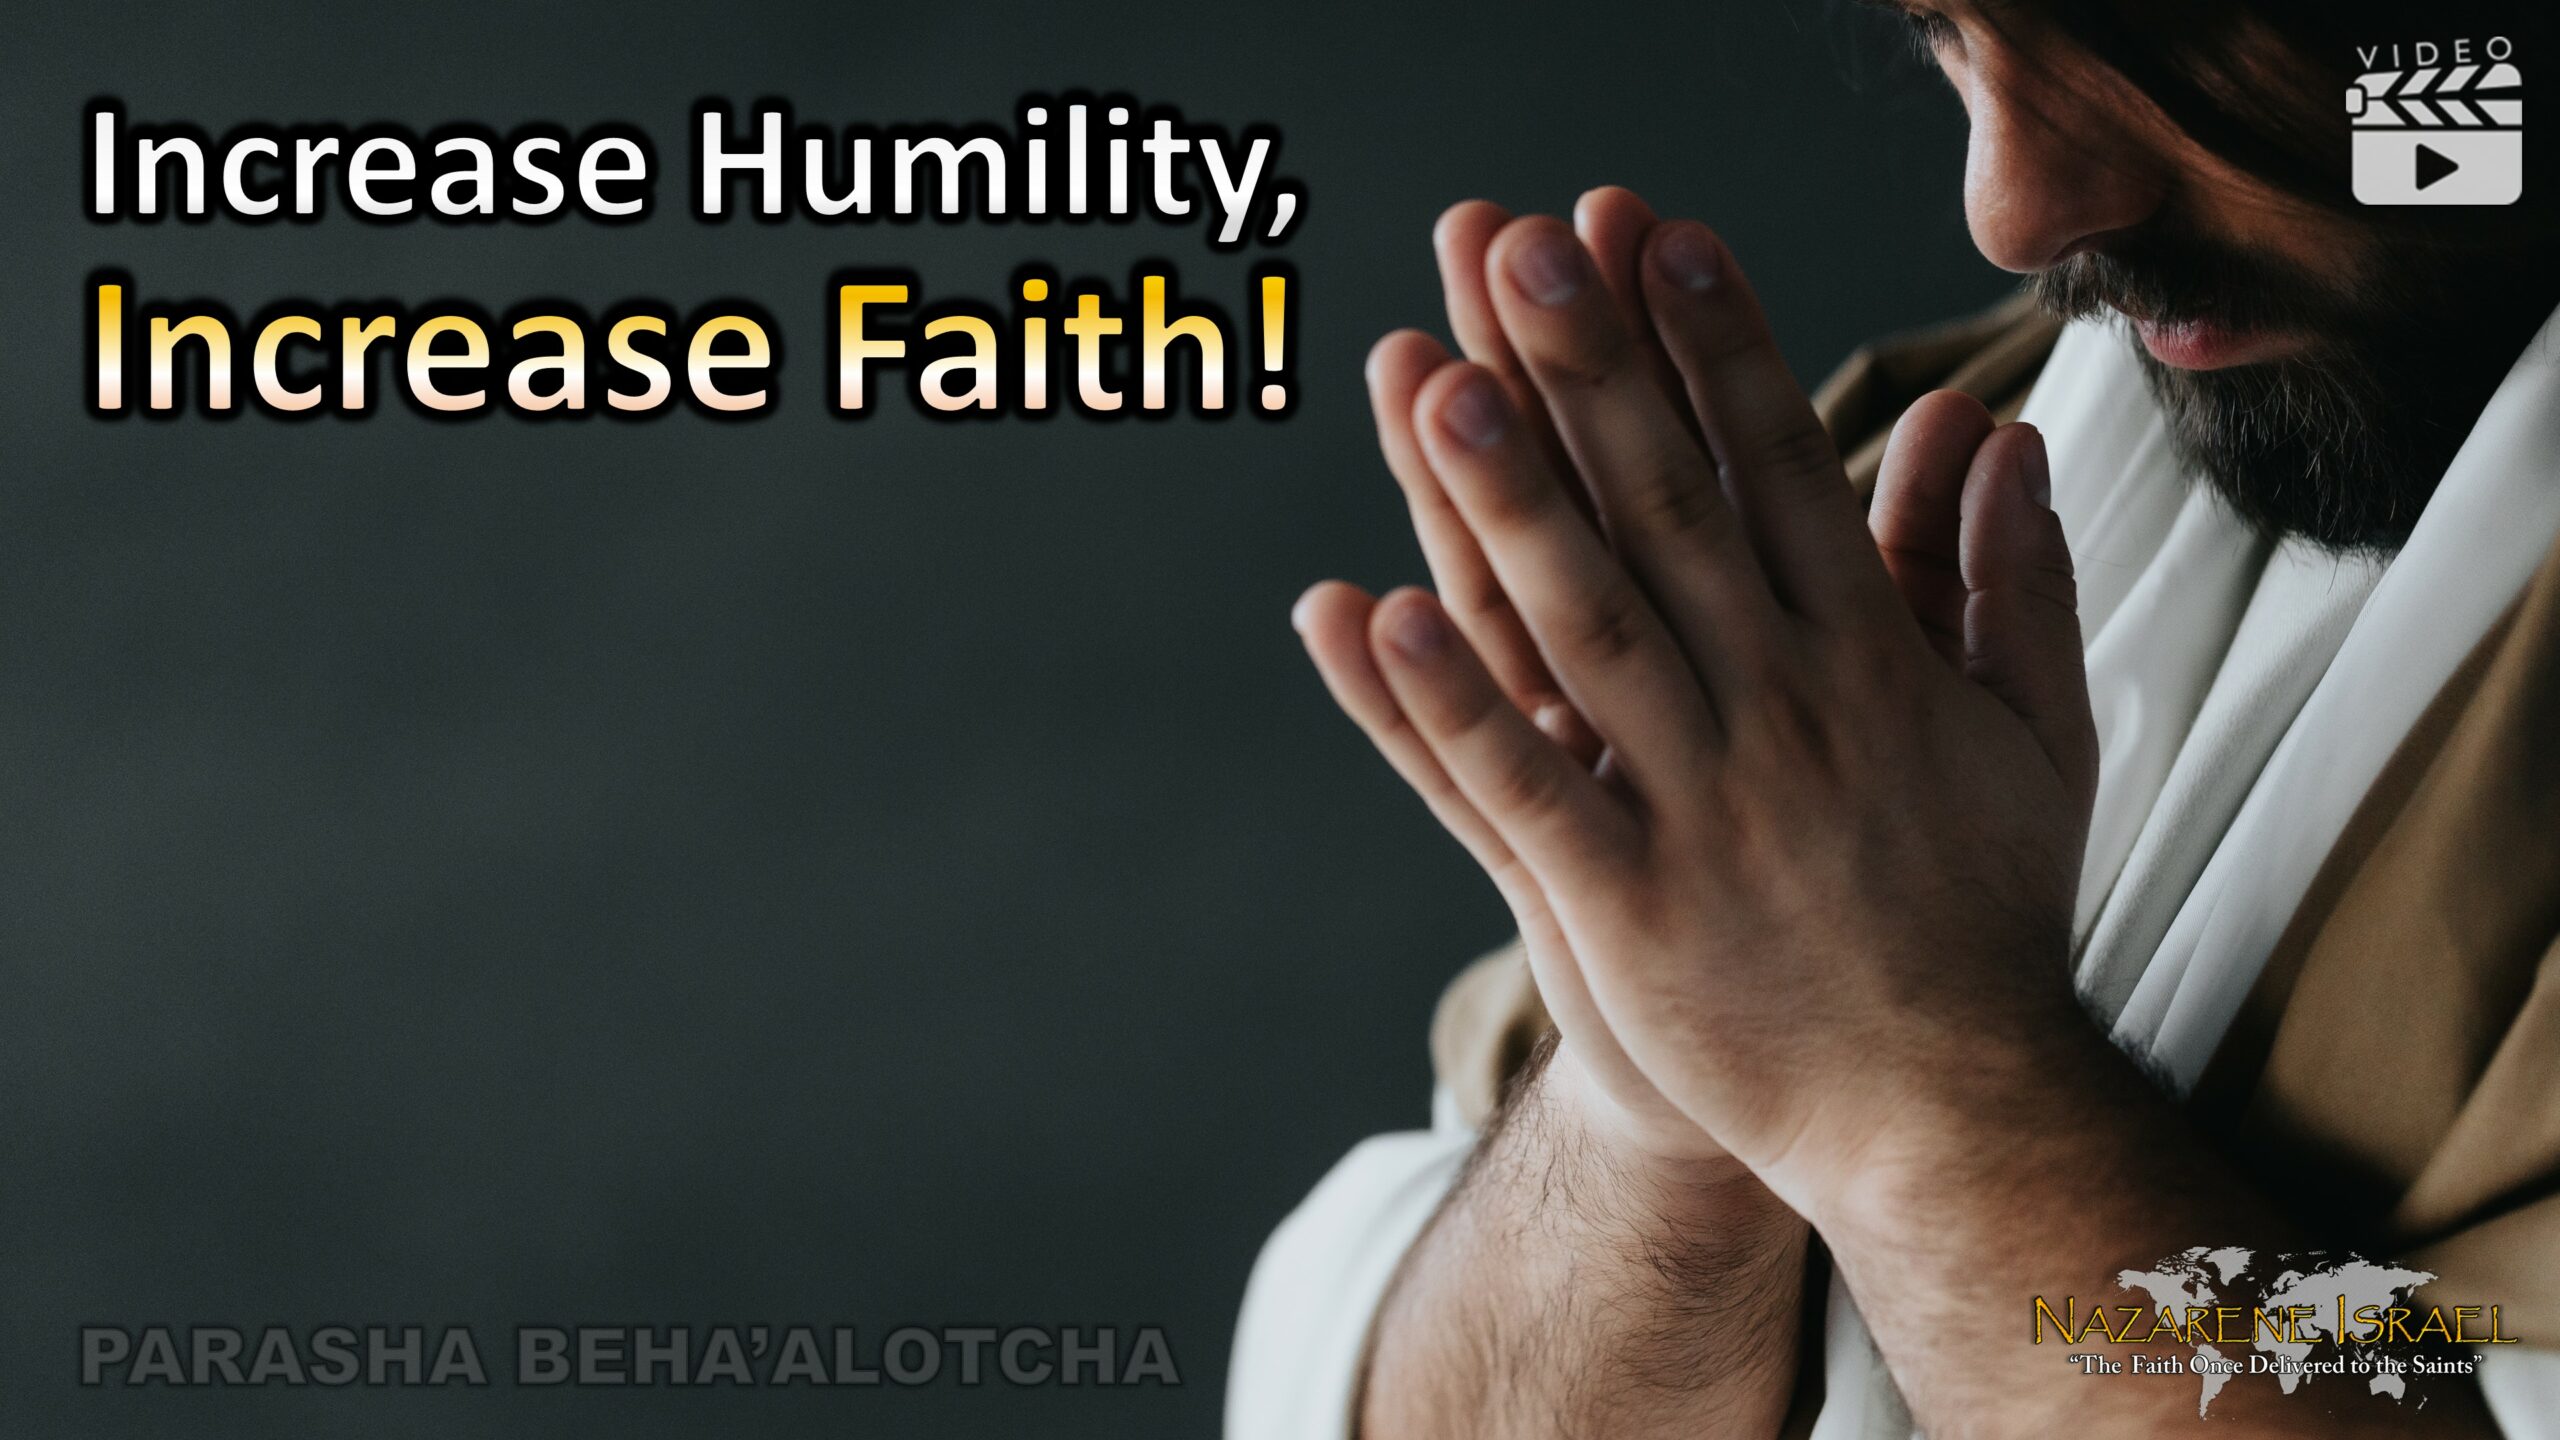 Parasha Beha’alotcha 2022: Increase Humility, Increase Faith